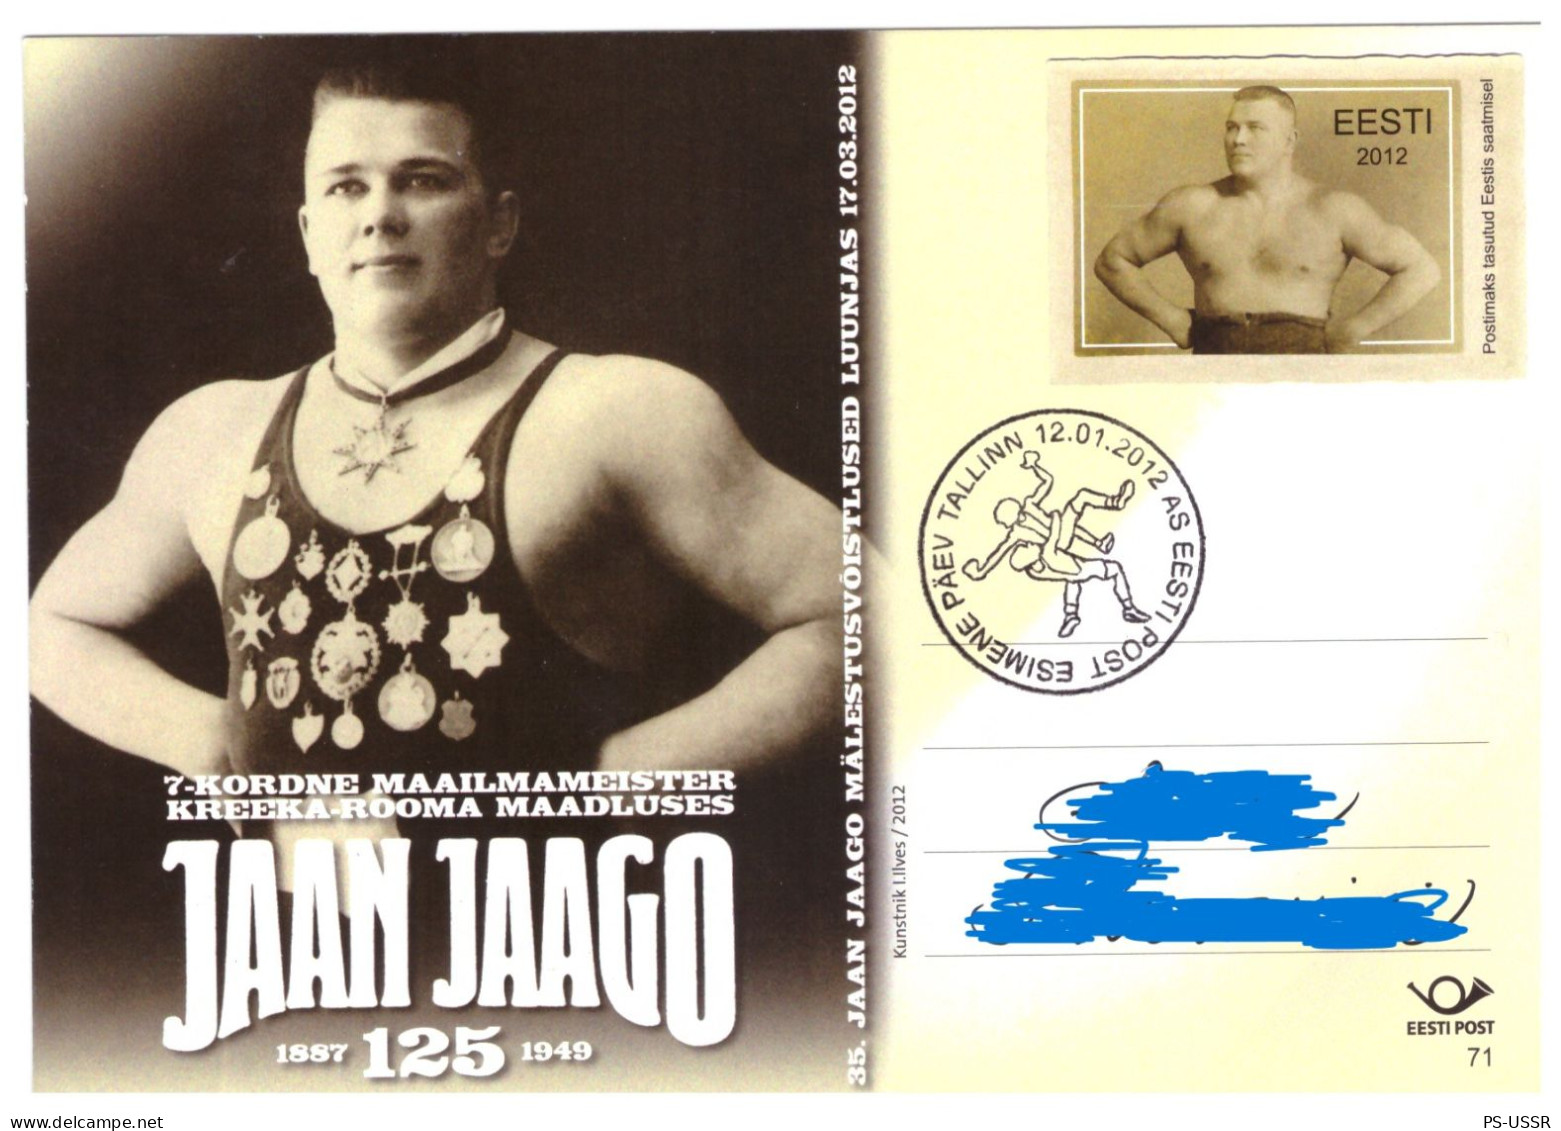 ESTONIA 2012 No.71 JAAK JAAGO WORLD CHAMPION WRESTLING POSTAL STATIONERY IMPRINTED STAMP FIRST DAY CANCELLING GANZSACHE - Wrestling